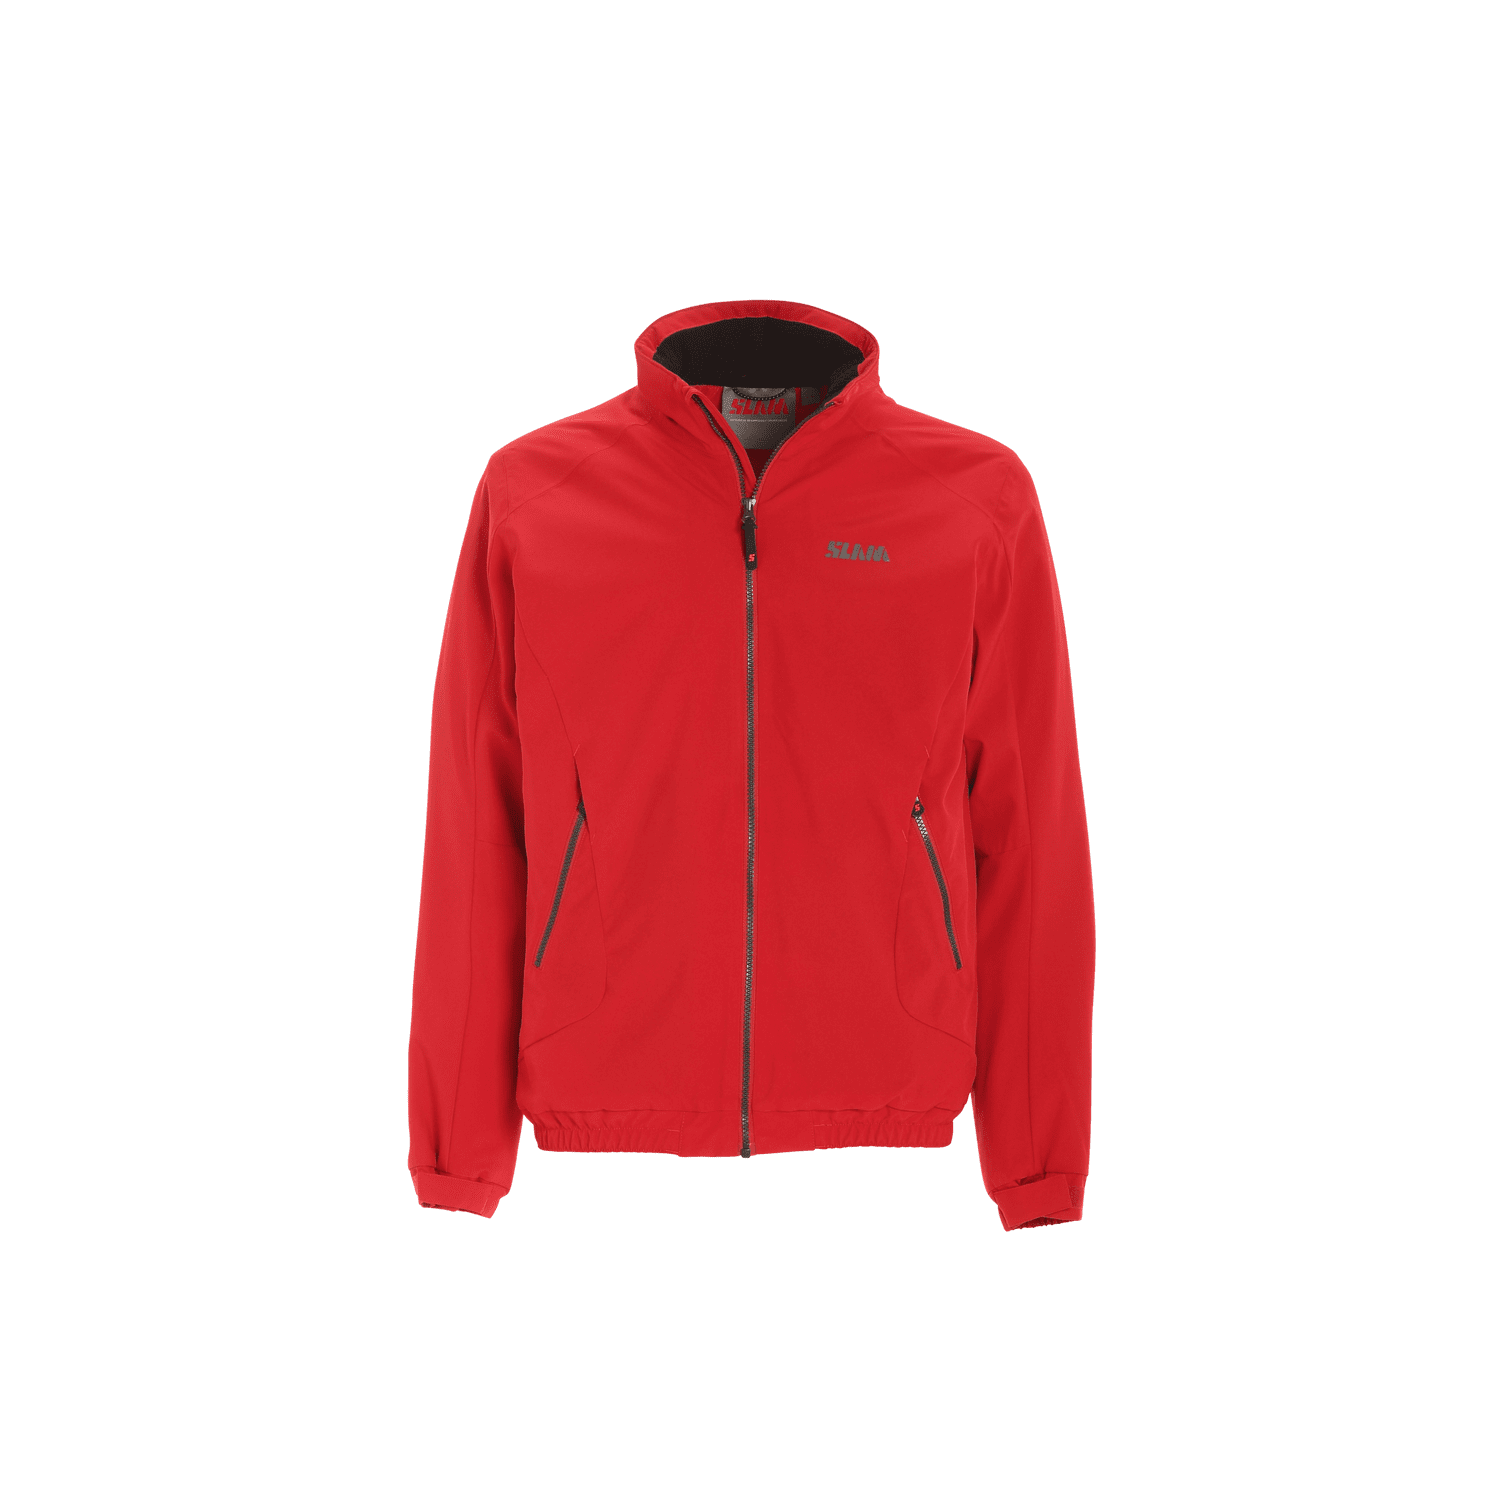 SLAM - Deck Winter Short Jacket